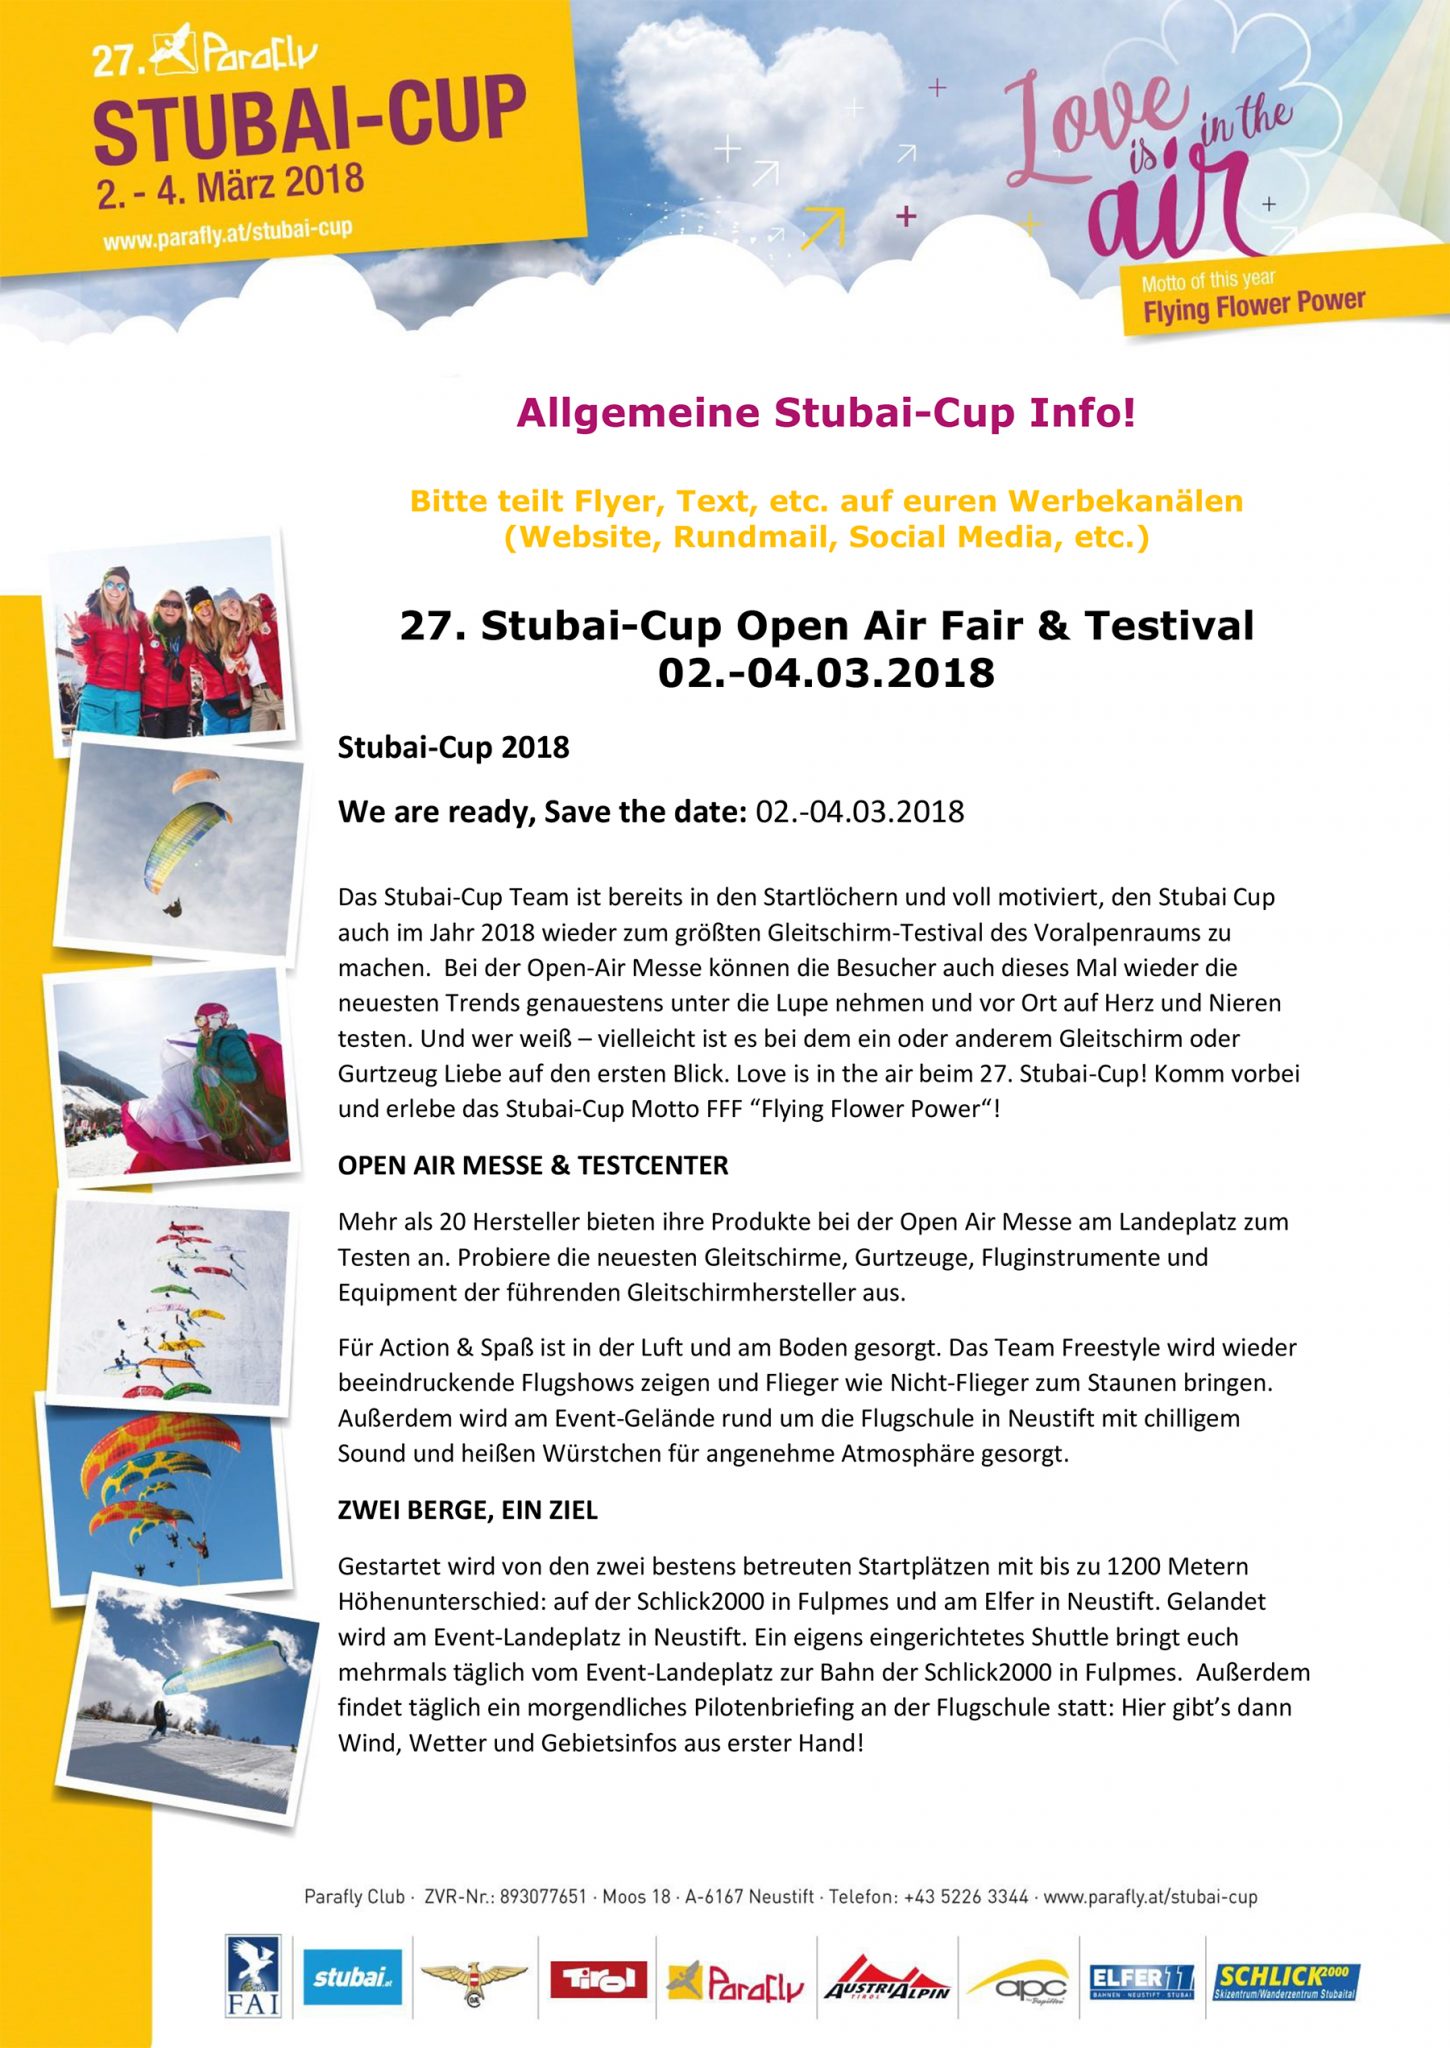 skywalk paragliders - STUBAI CUP 2018